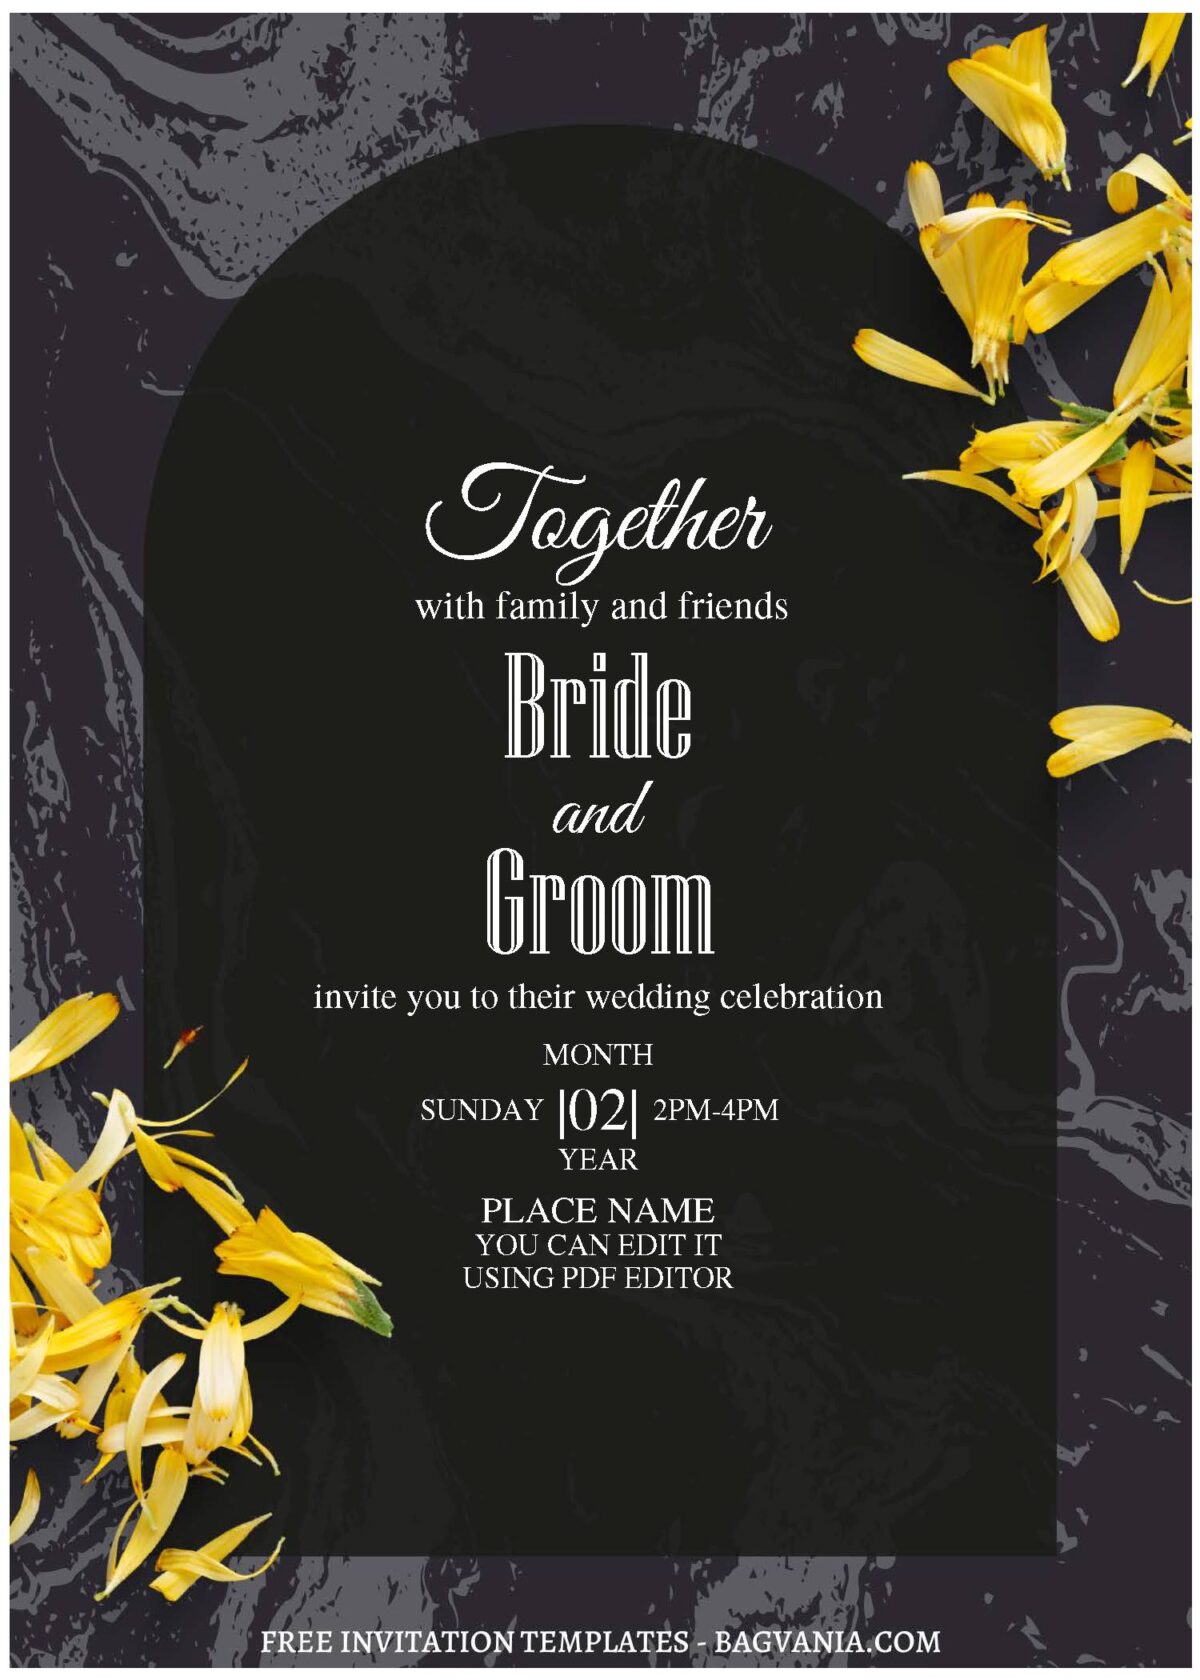 (Free Editable PDF) Luxury Black Marble Floral Wedding Invitation Templates with flower petals